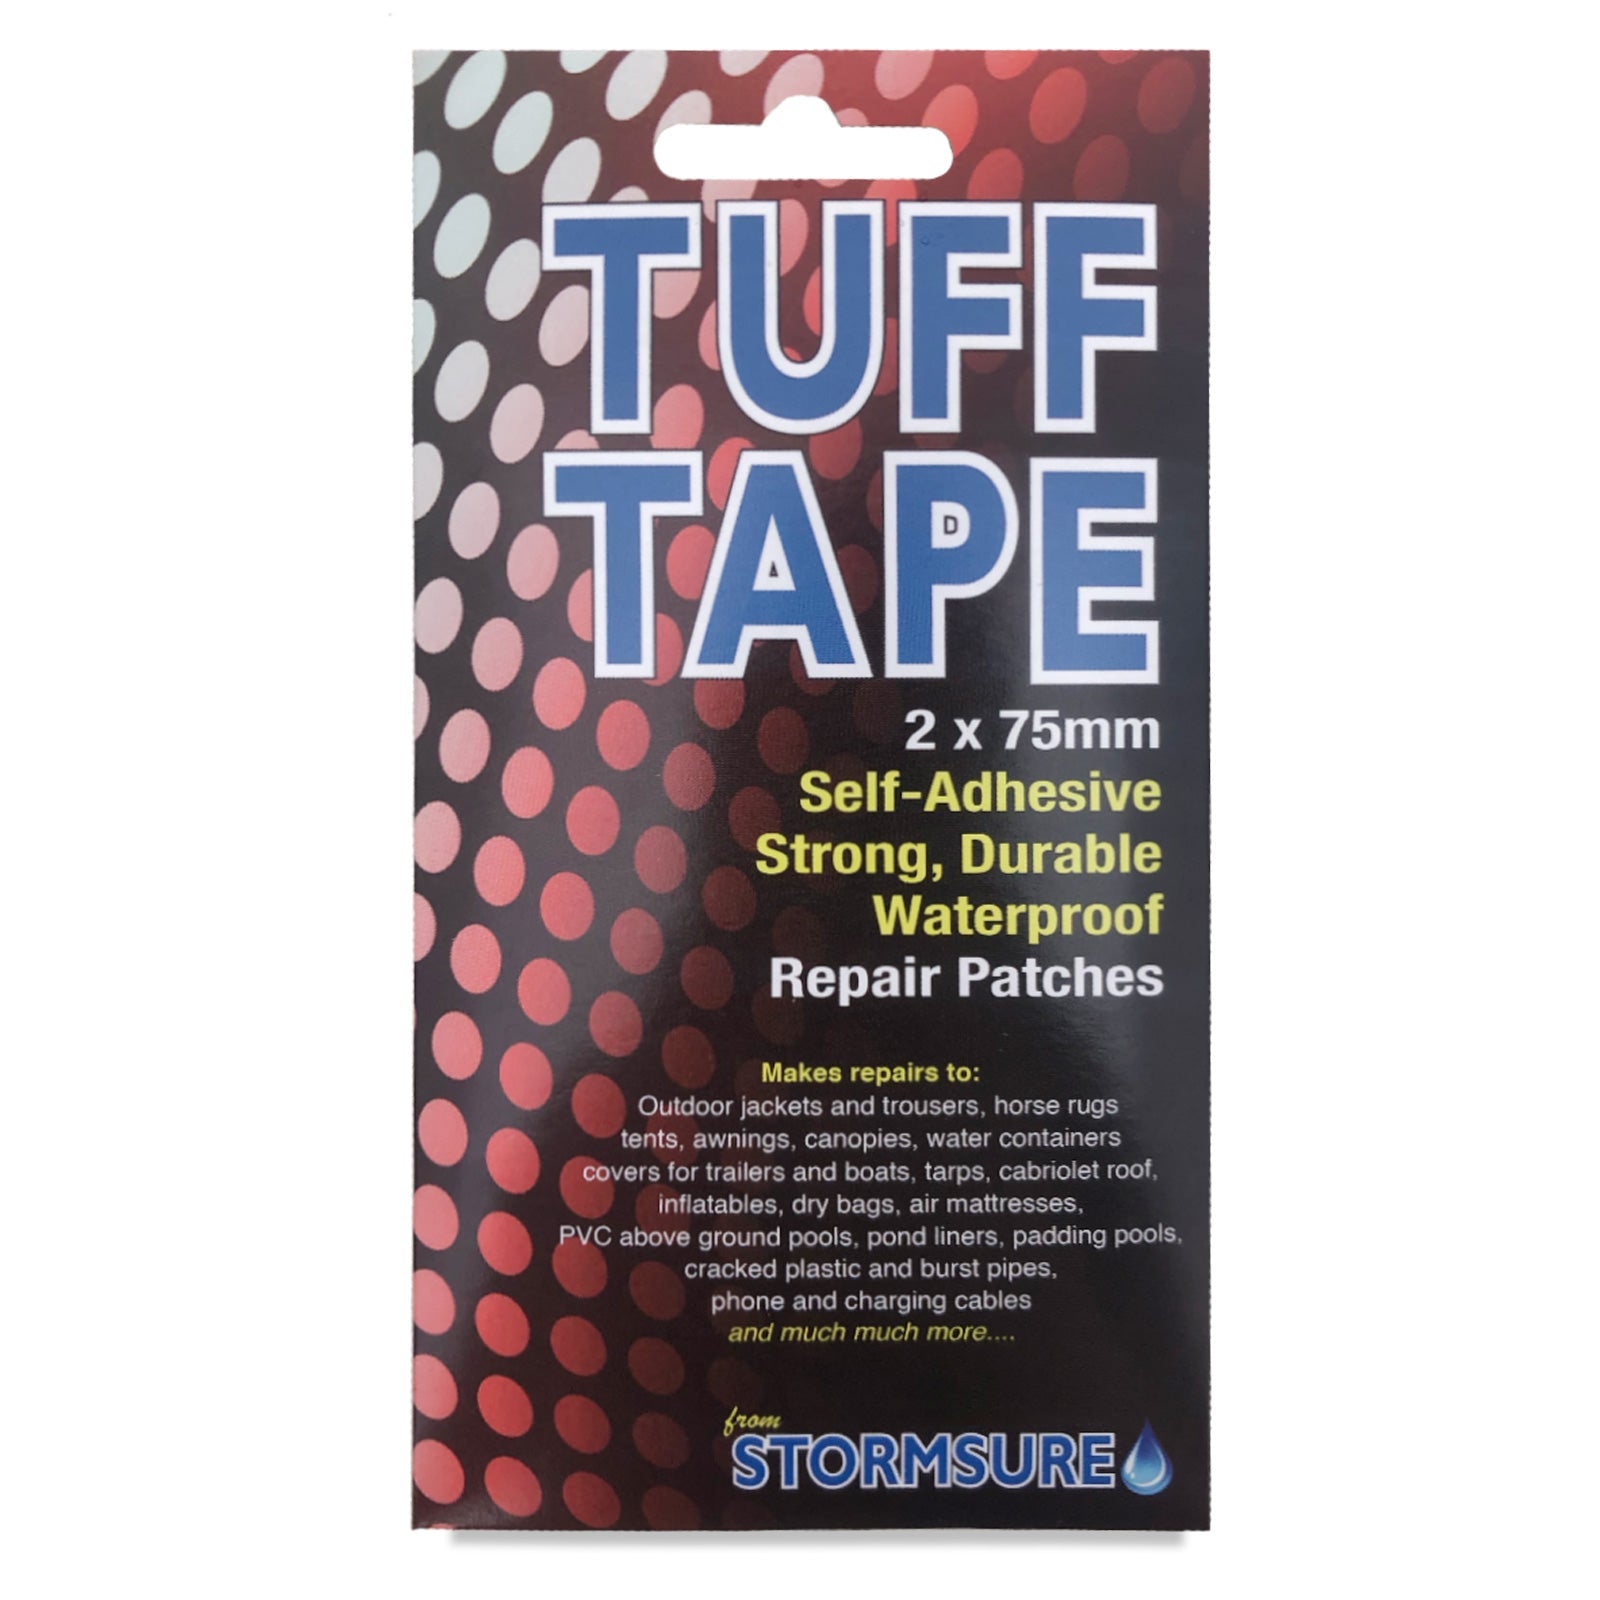 TUFF Tape Waterproof Repair Patches 75mm (2-Pack)